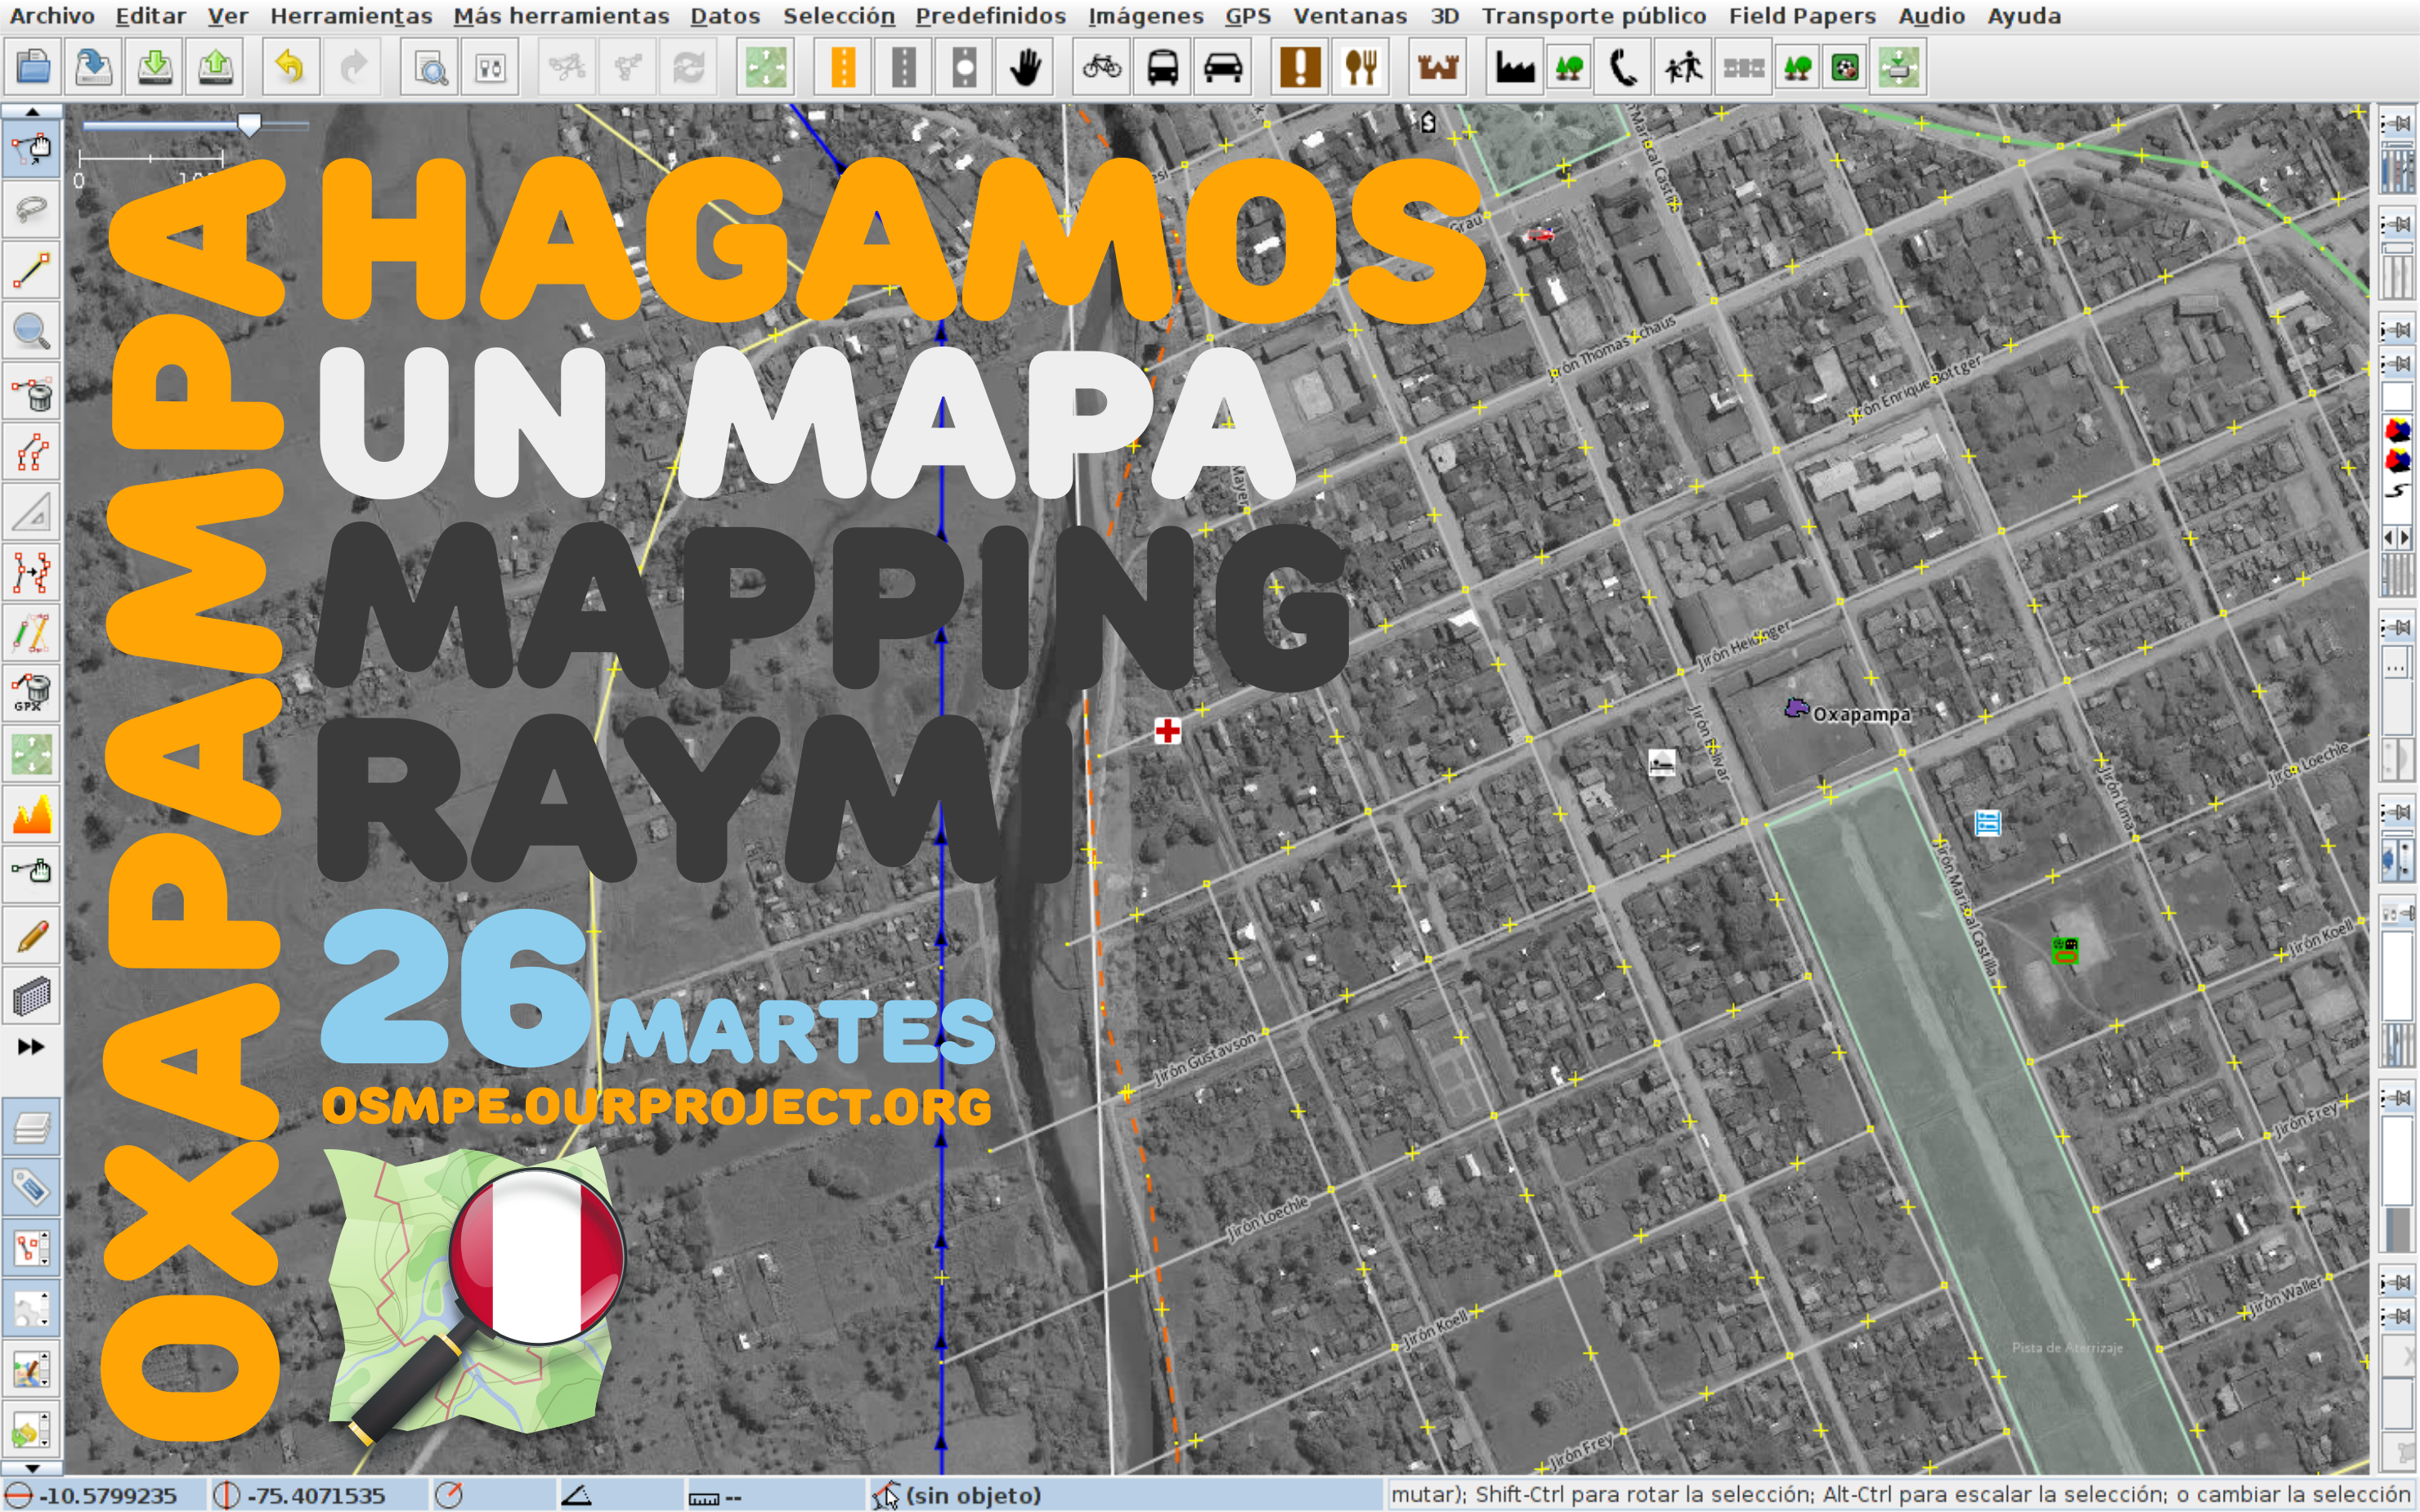 Mapping Raymi Oxapampa